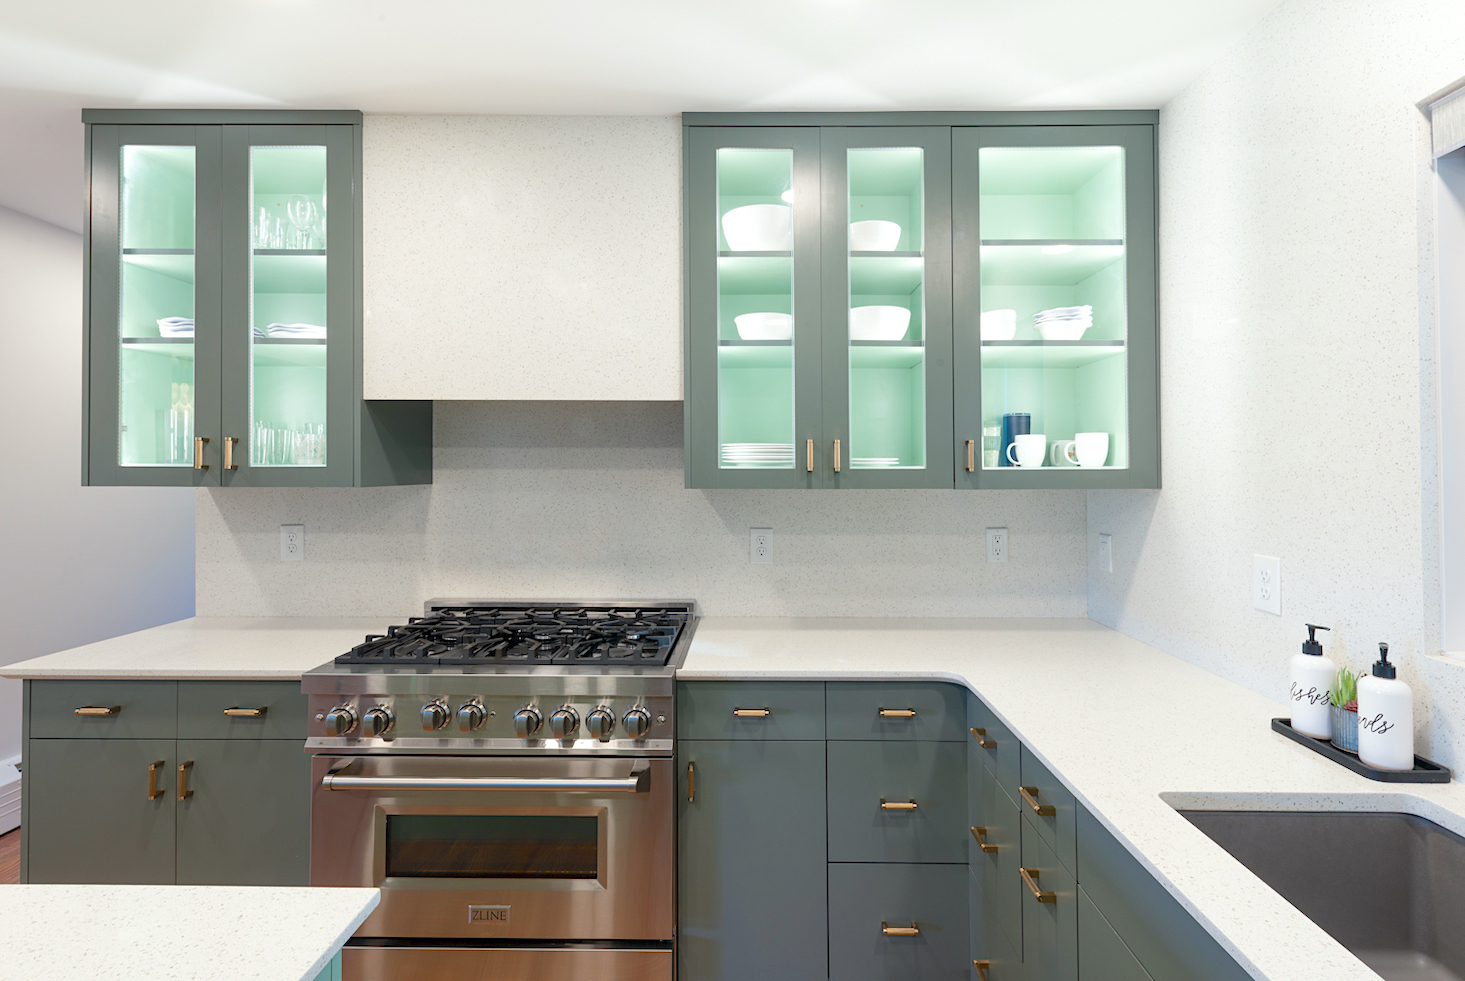 Sage green cabinets with backsplash to ceiling, white quartz